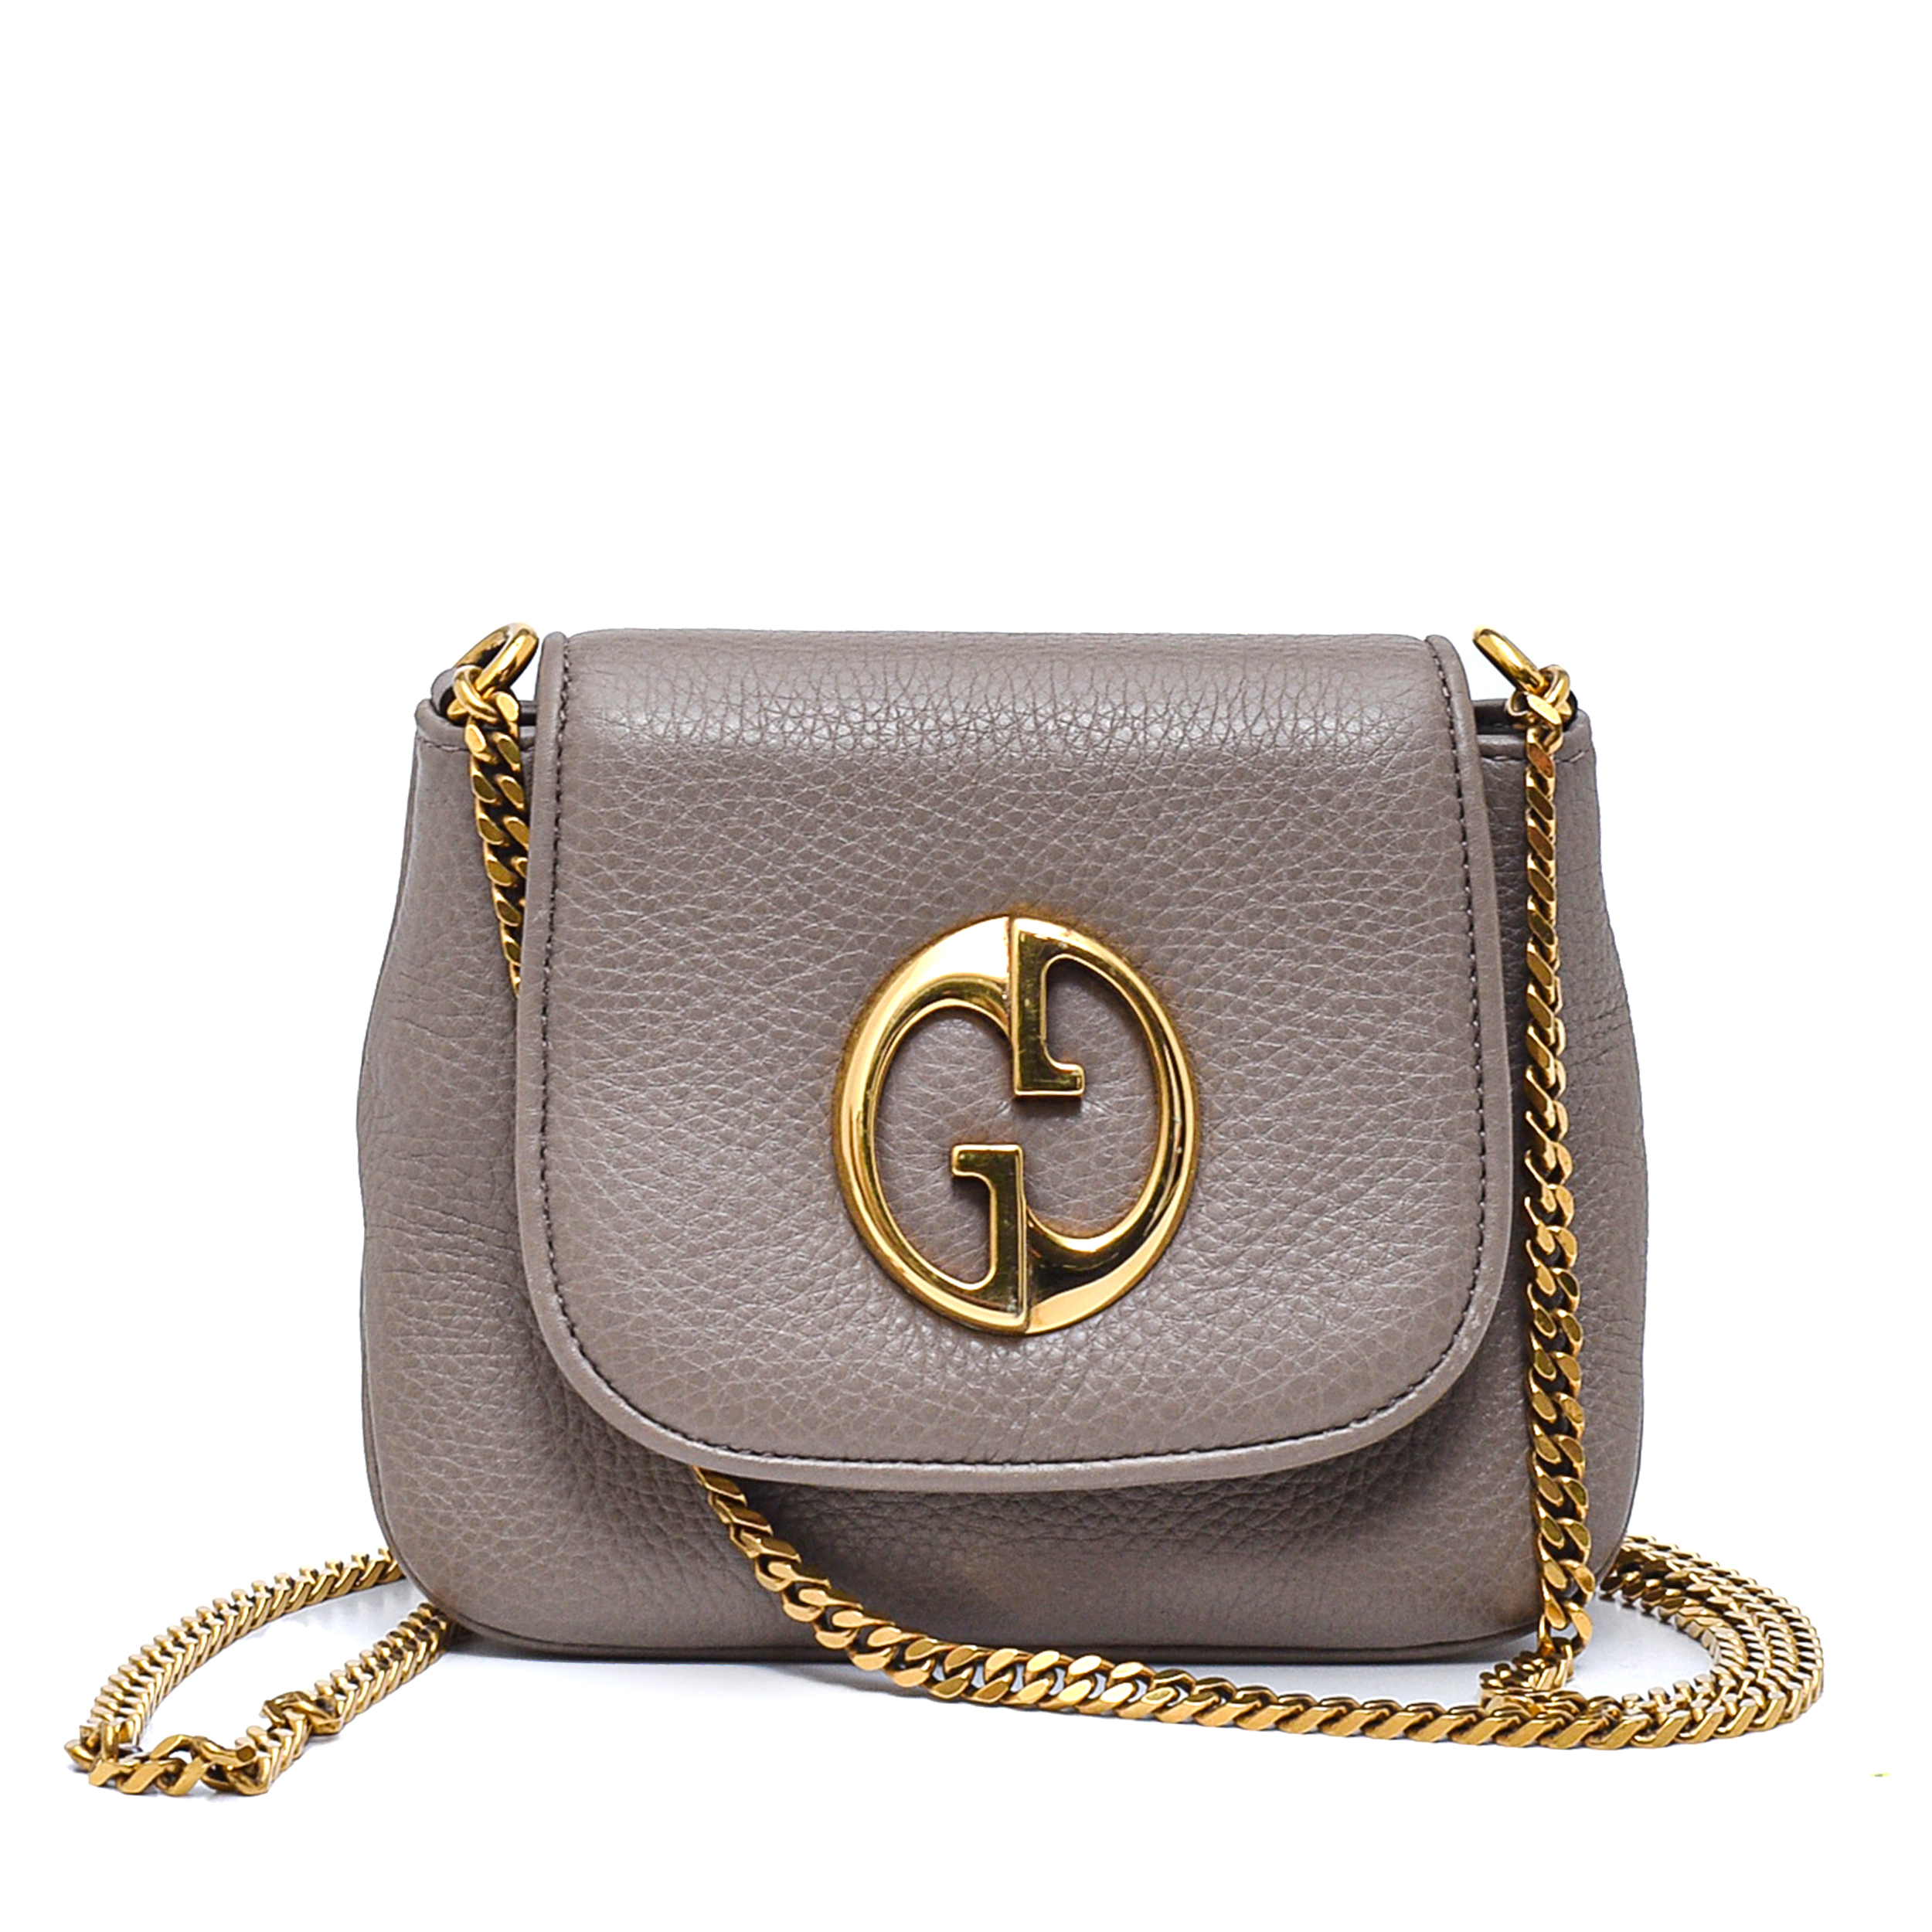 Gucci - Grey Grained Leather 1973 Chain Purse Crossbody Bag